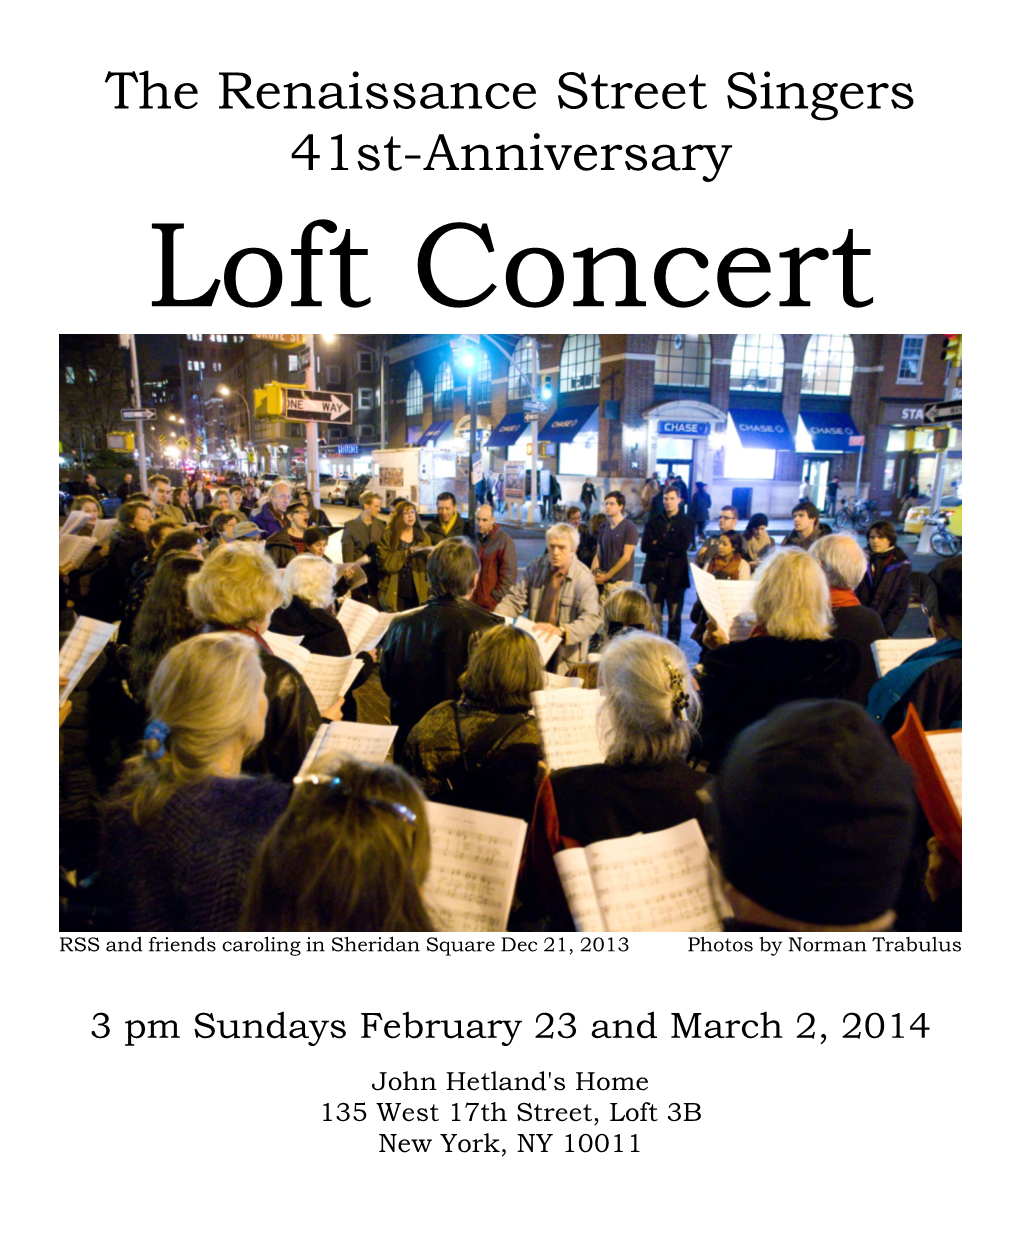 Loft Concert Program